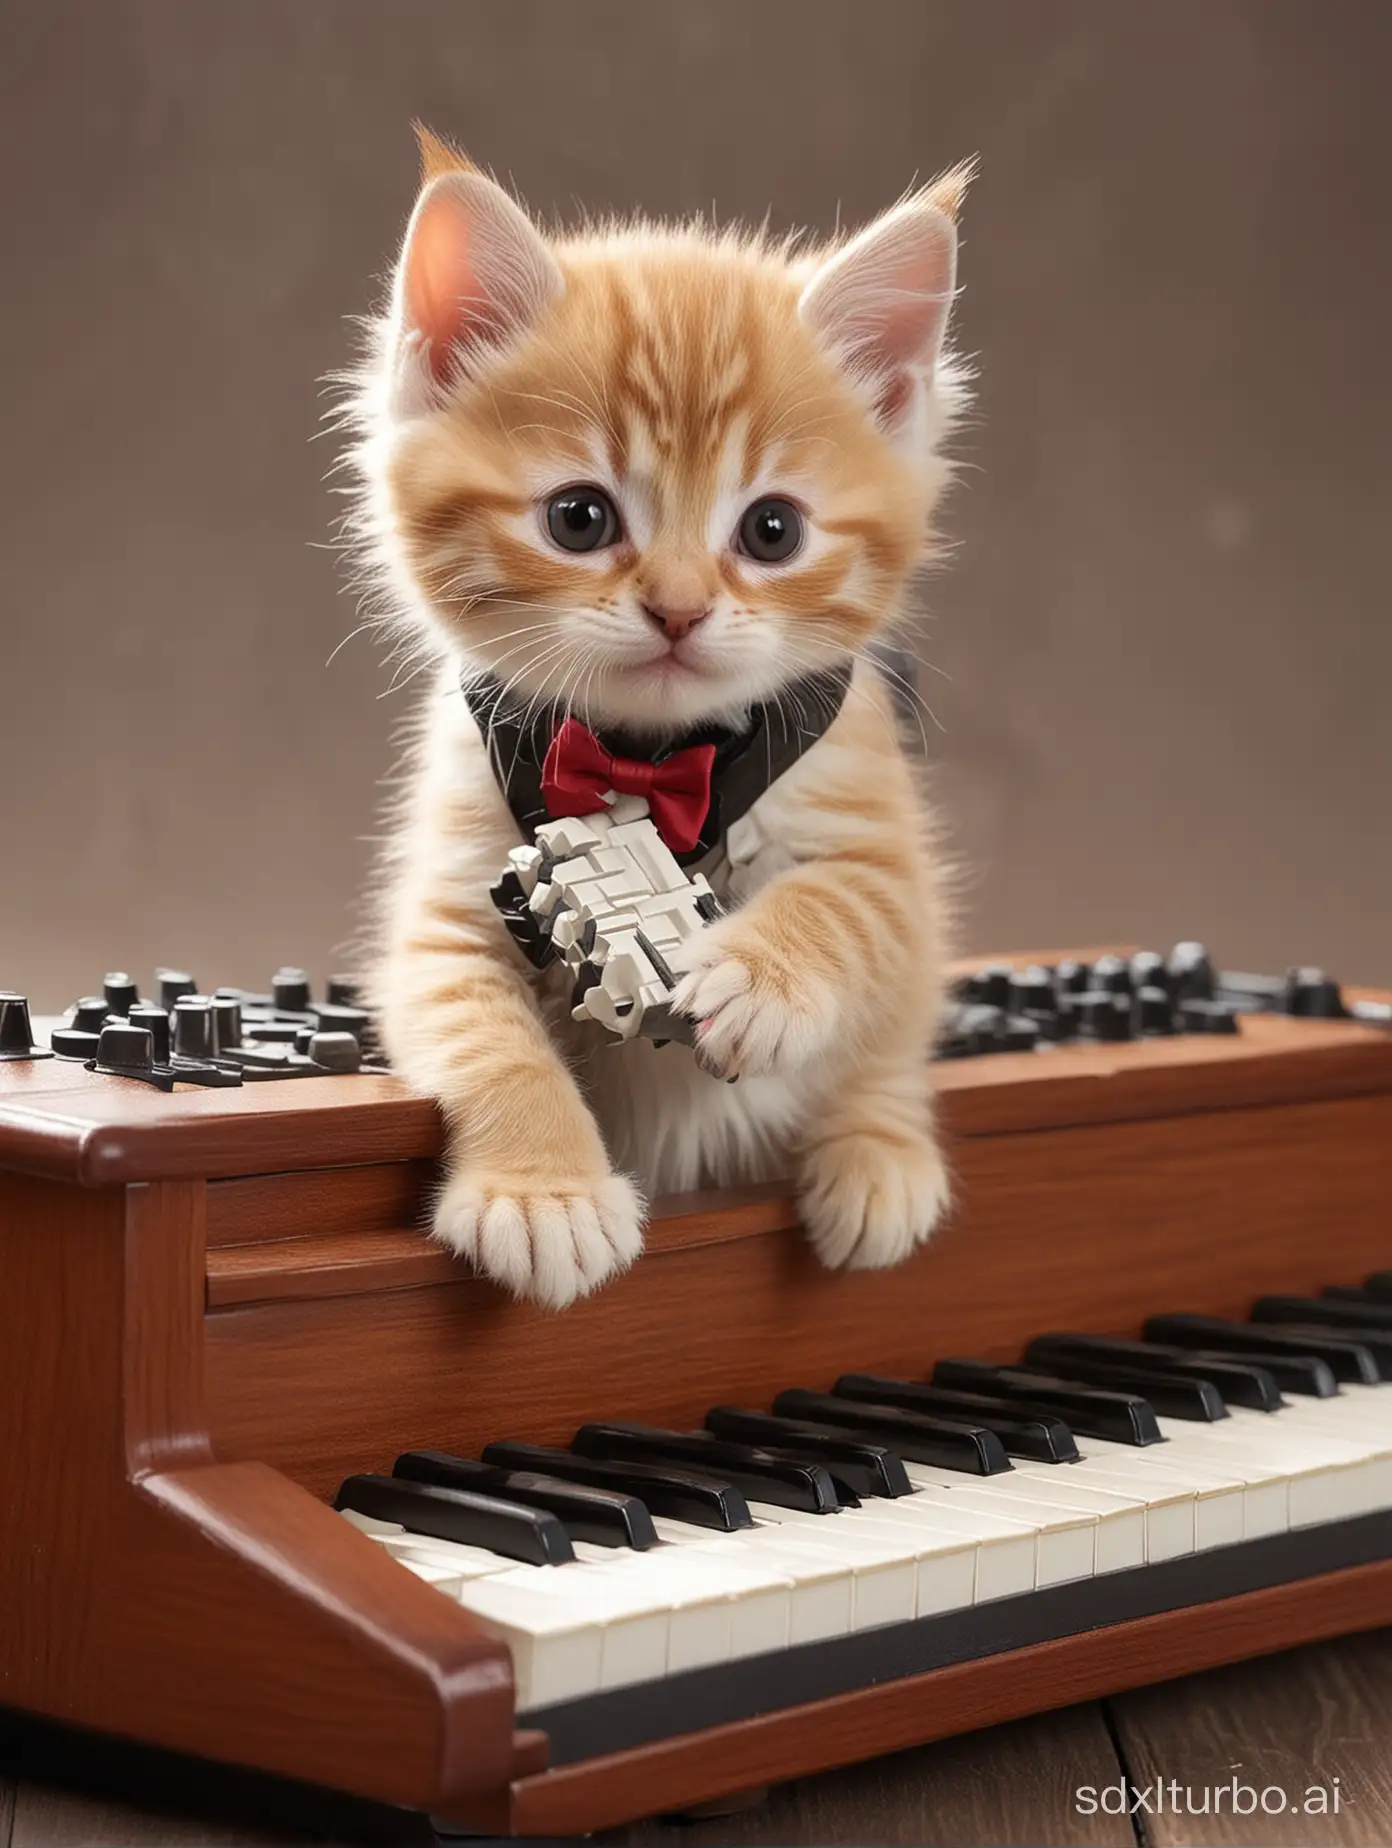 Anthropomorphic-Kitten-Playing-Keyboard-Cute-Feline-Musician-in-Action